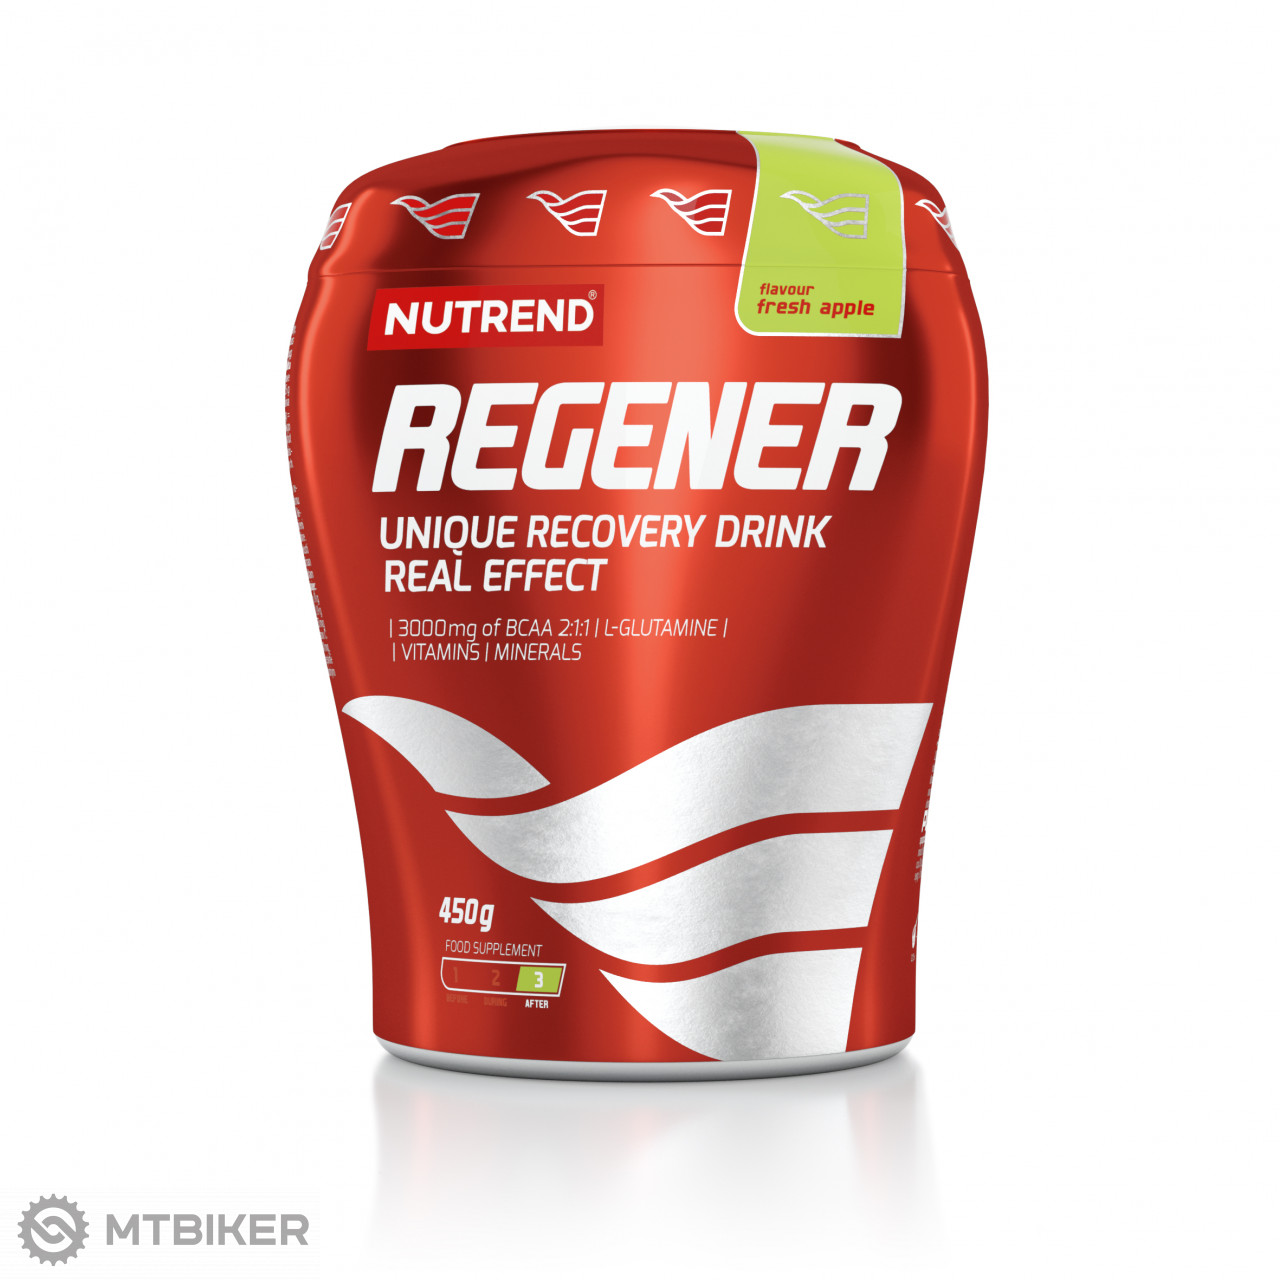 NUTREND REGENER regeneračný nápoj, 450 g